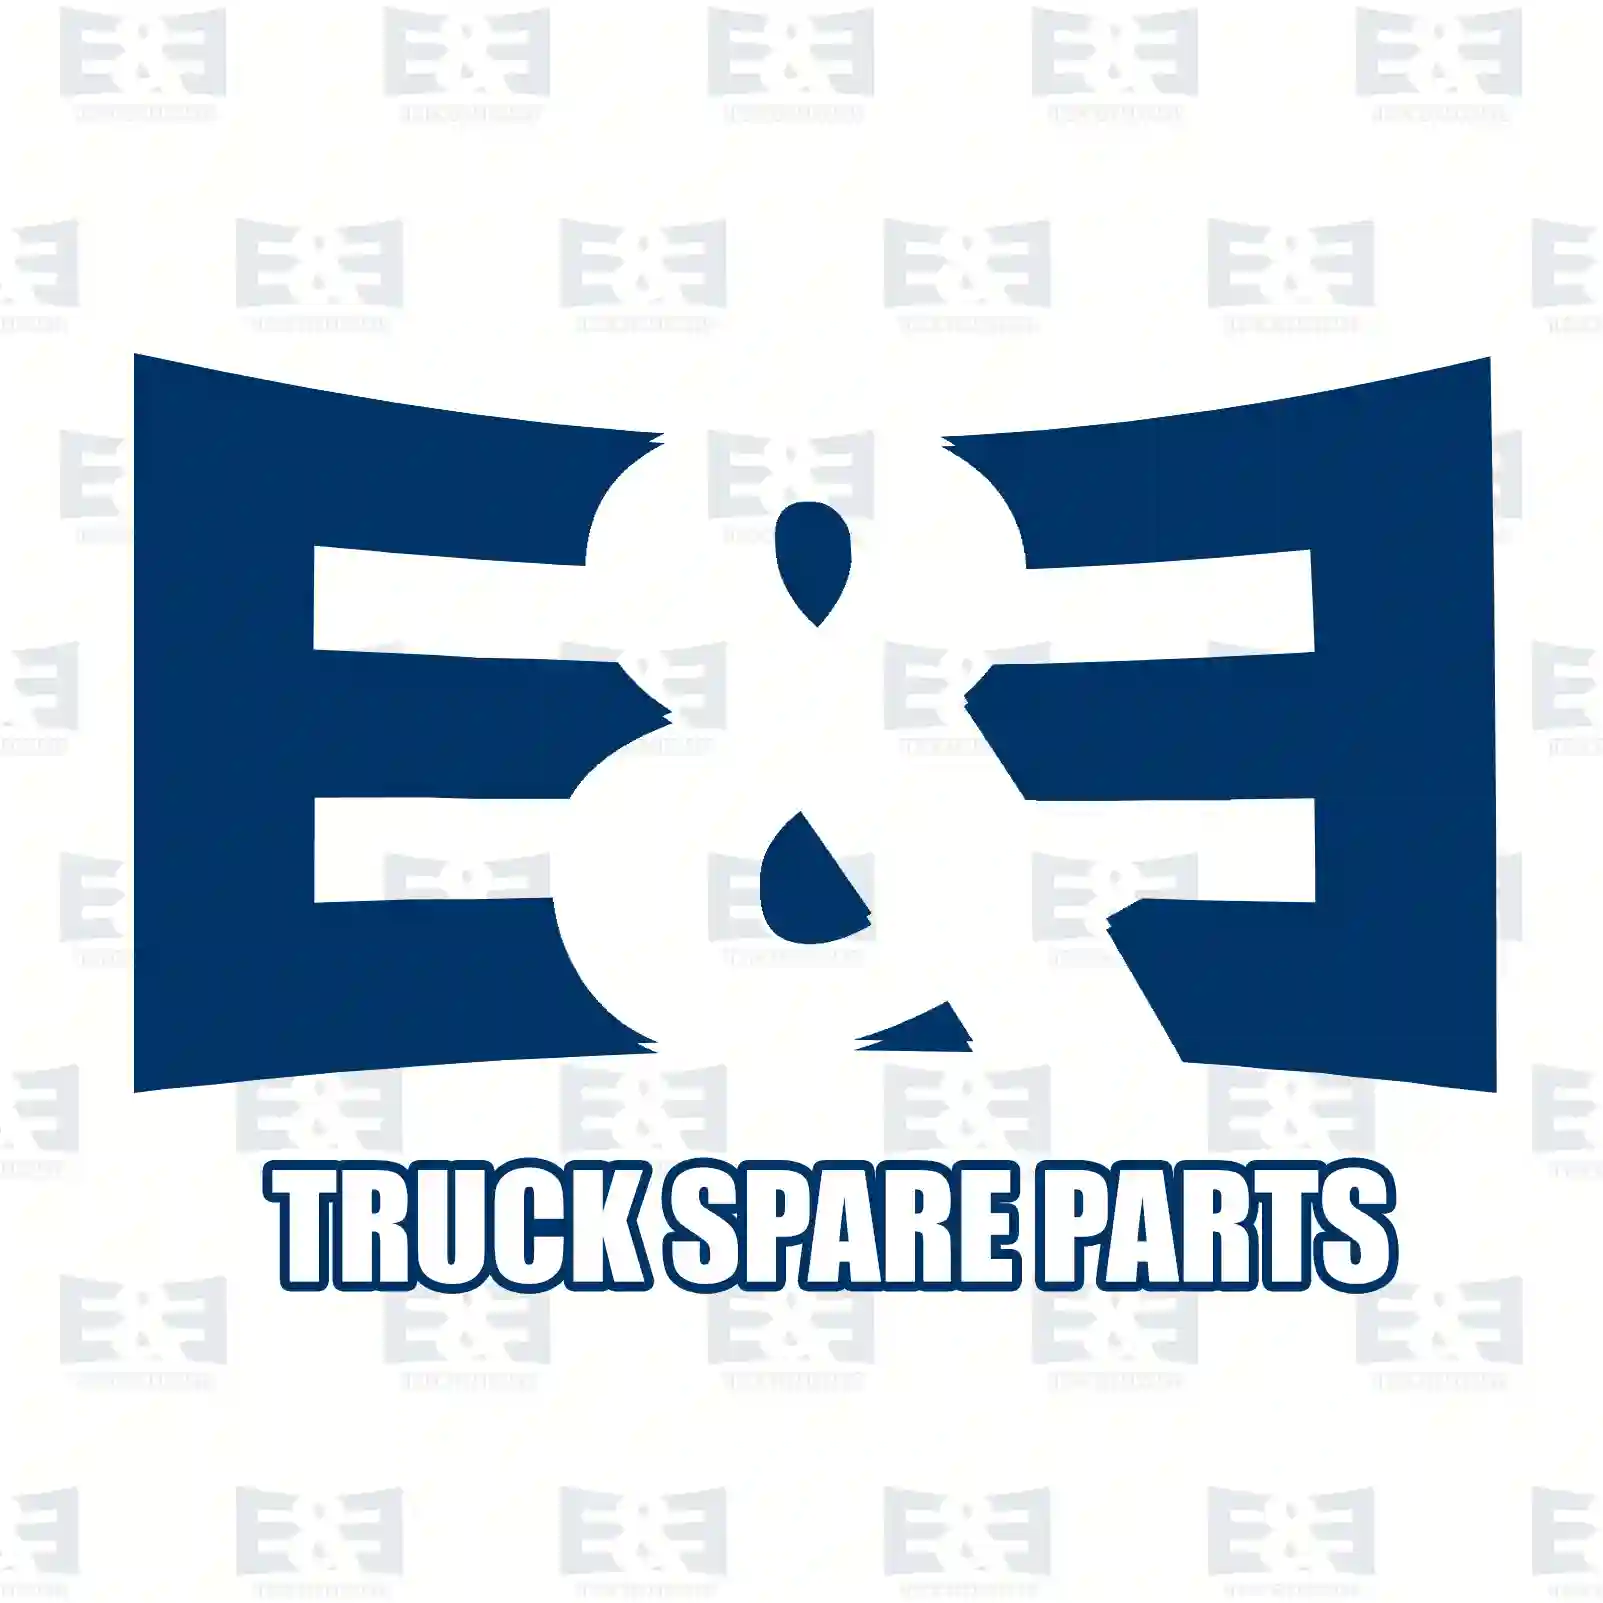  Pressure sensor, ECAS || E&E Truck Spare Parts | Truck Spare Parts, Auotomotive Spare Parts